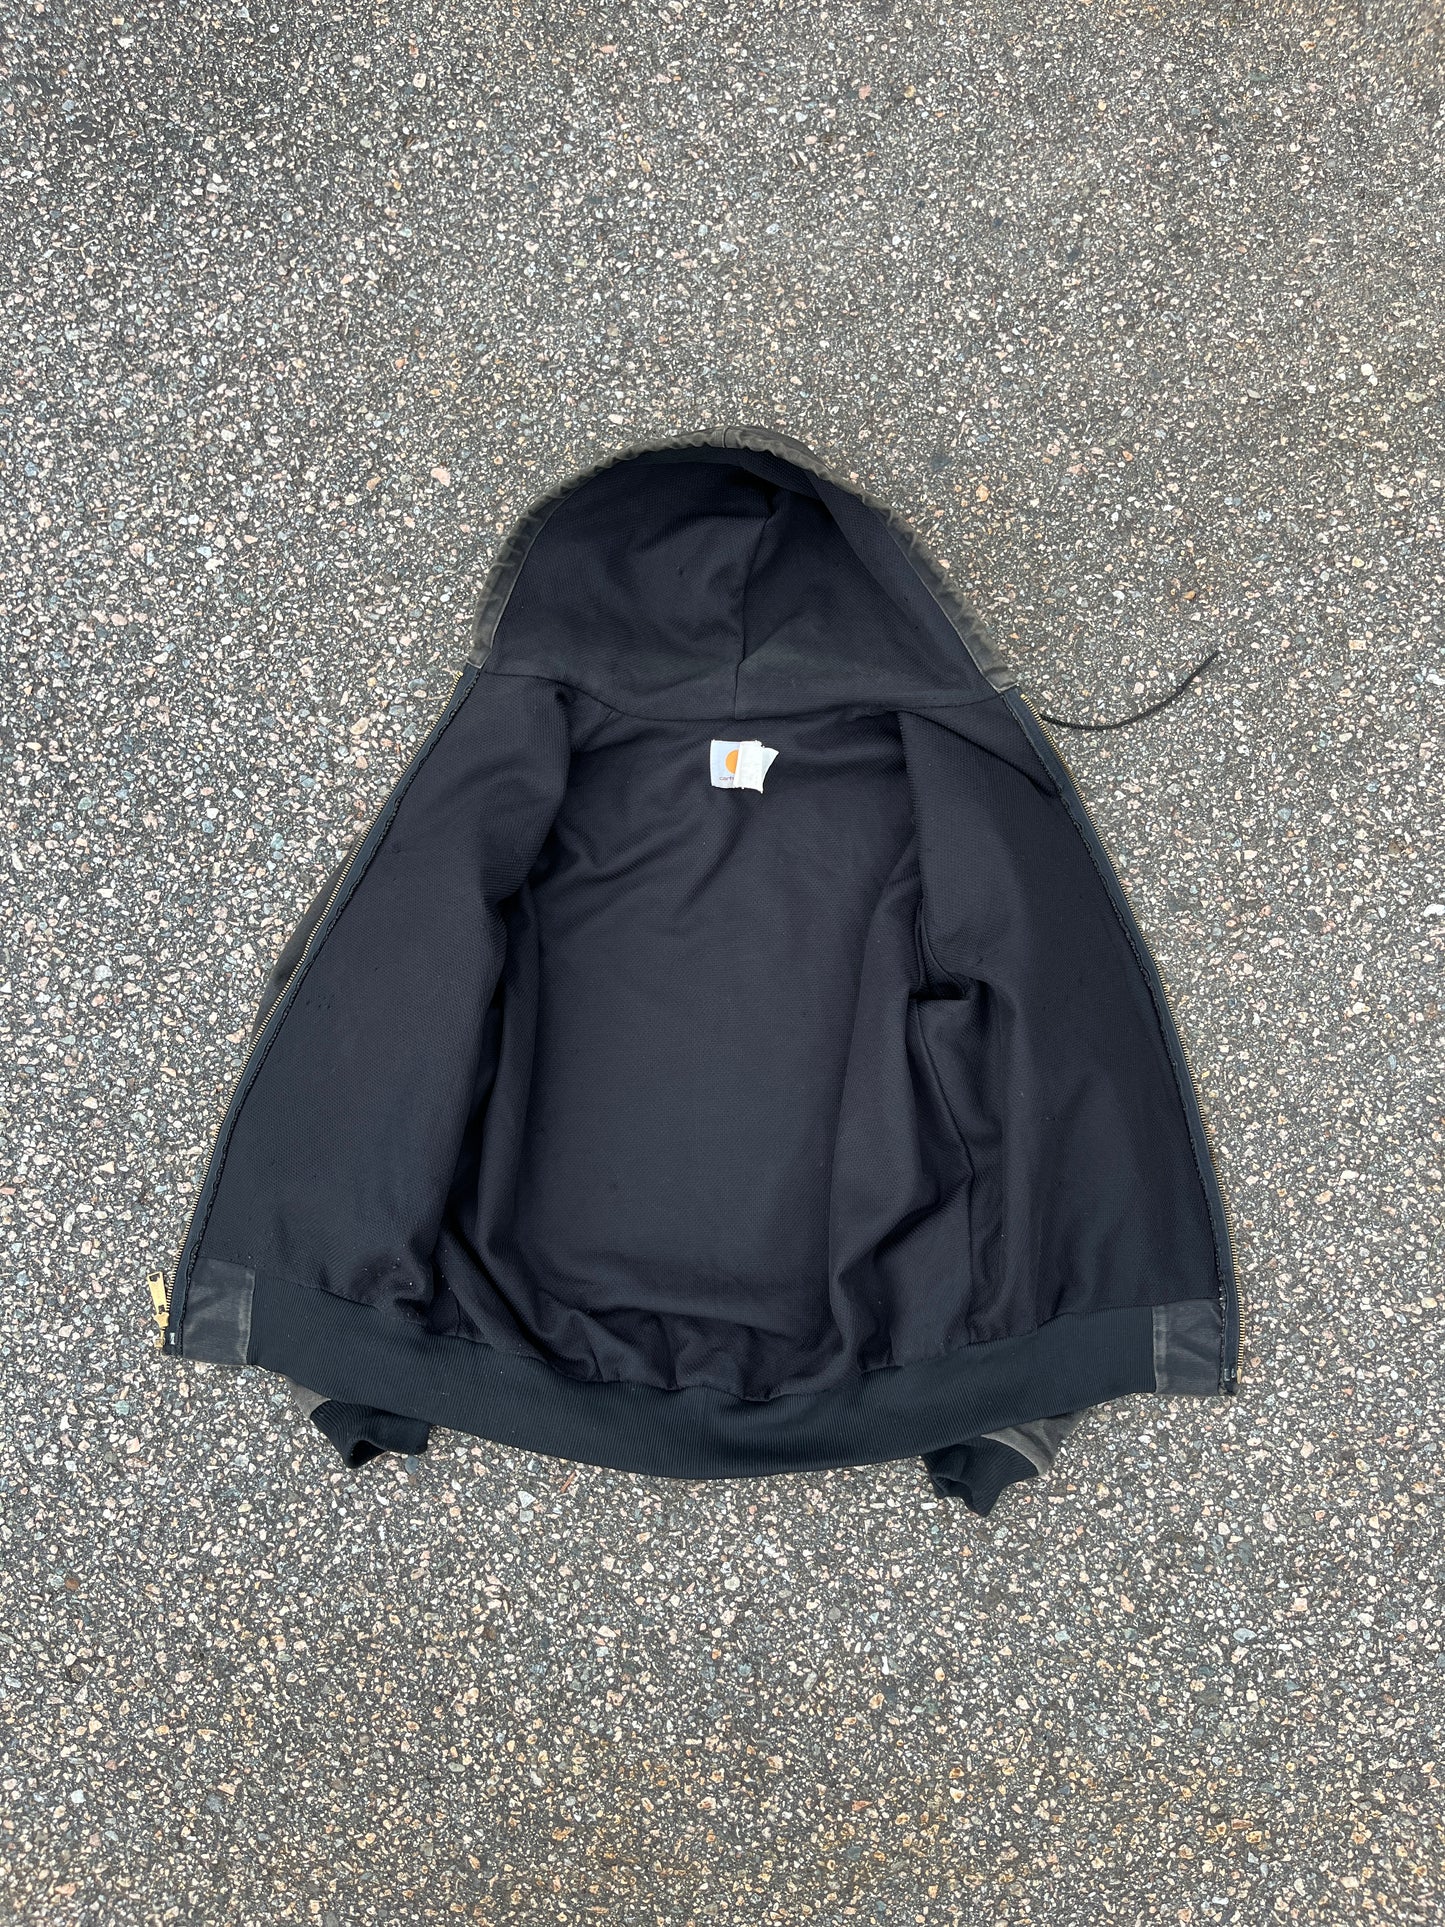 Faded n Distressed Black Carhartt Active Jacket - Medium